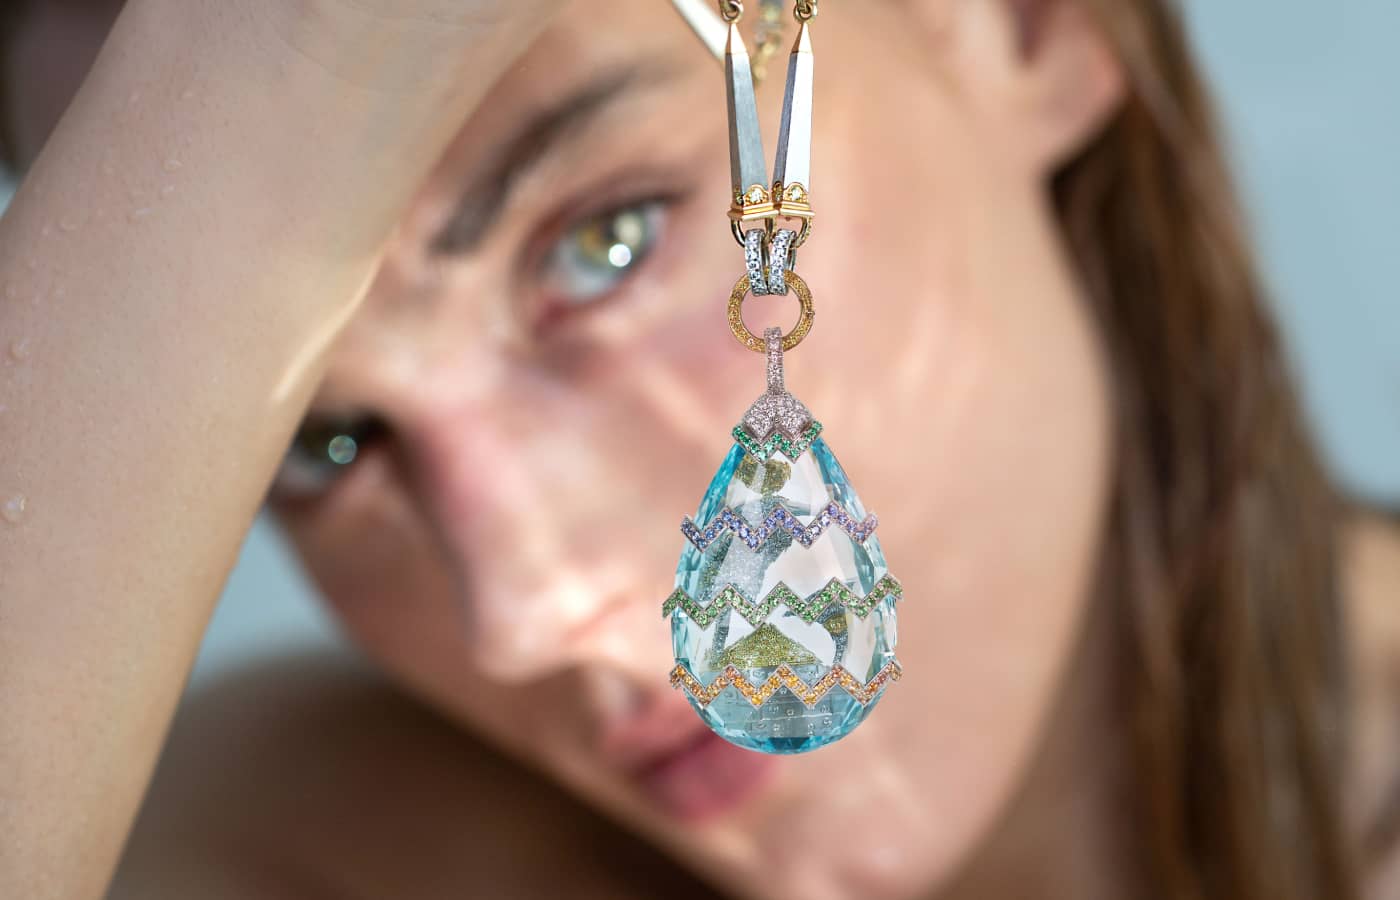 Model holding a Seijo aquamarine and coloured gemstone pendant